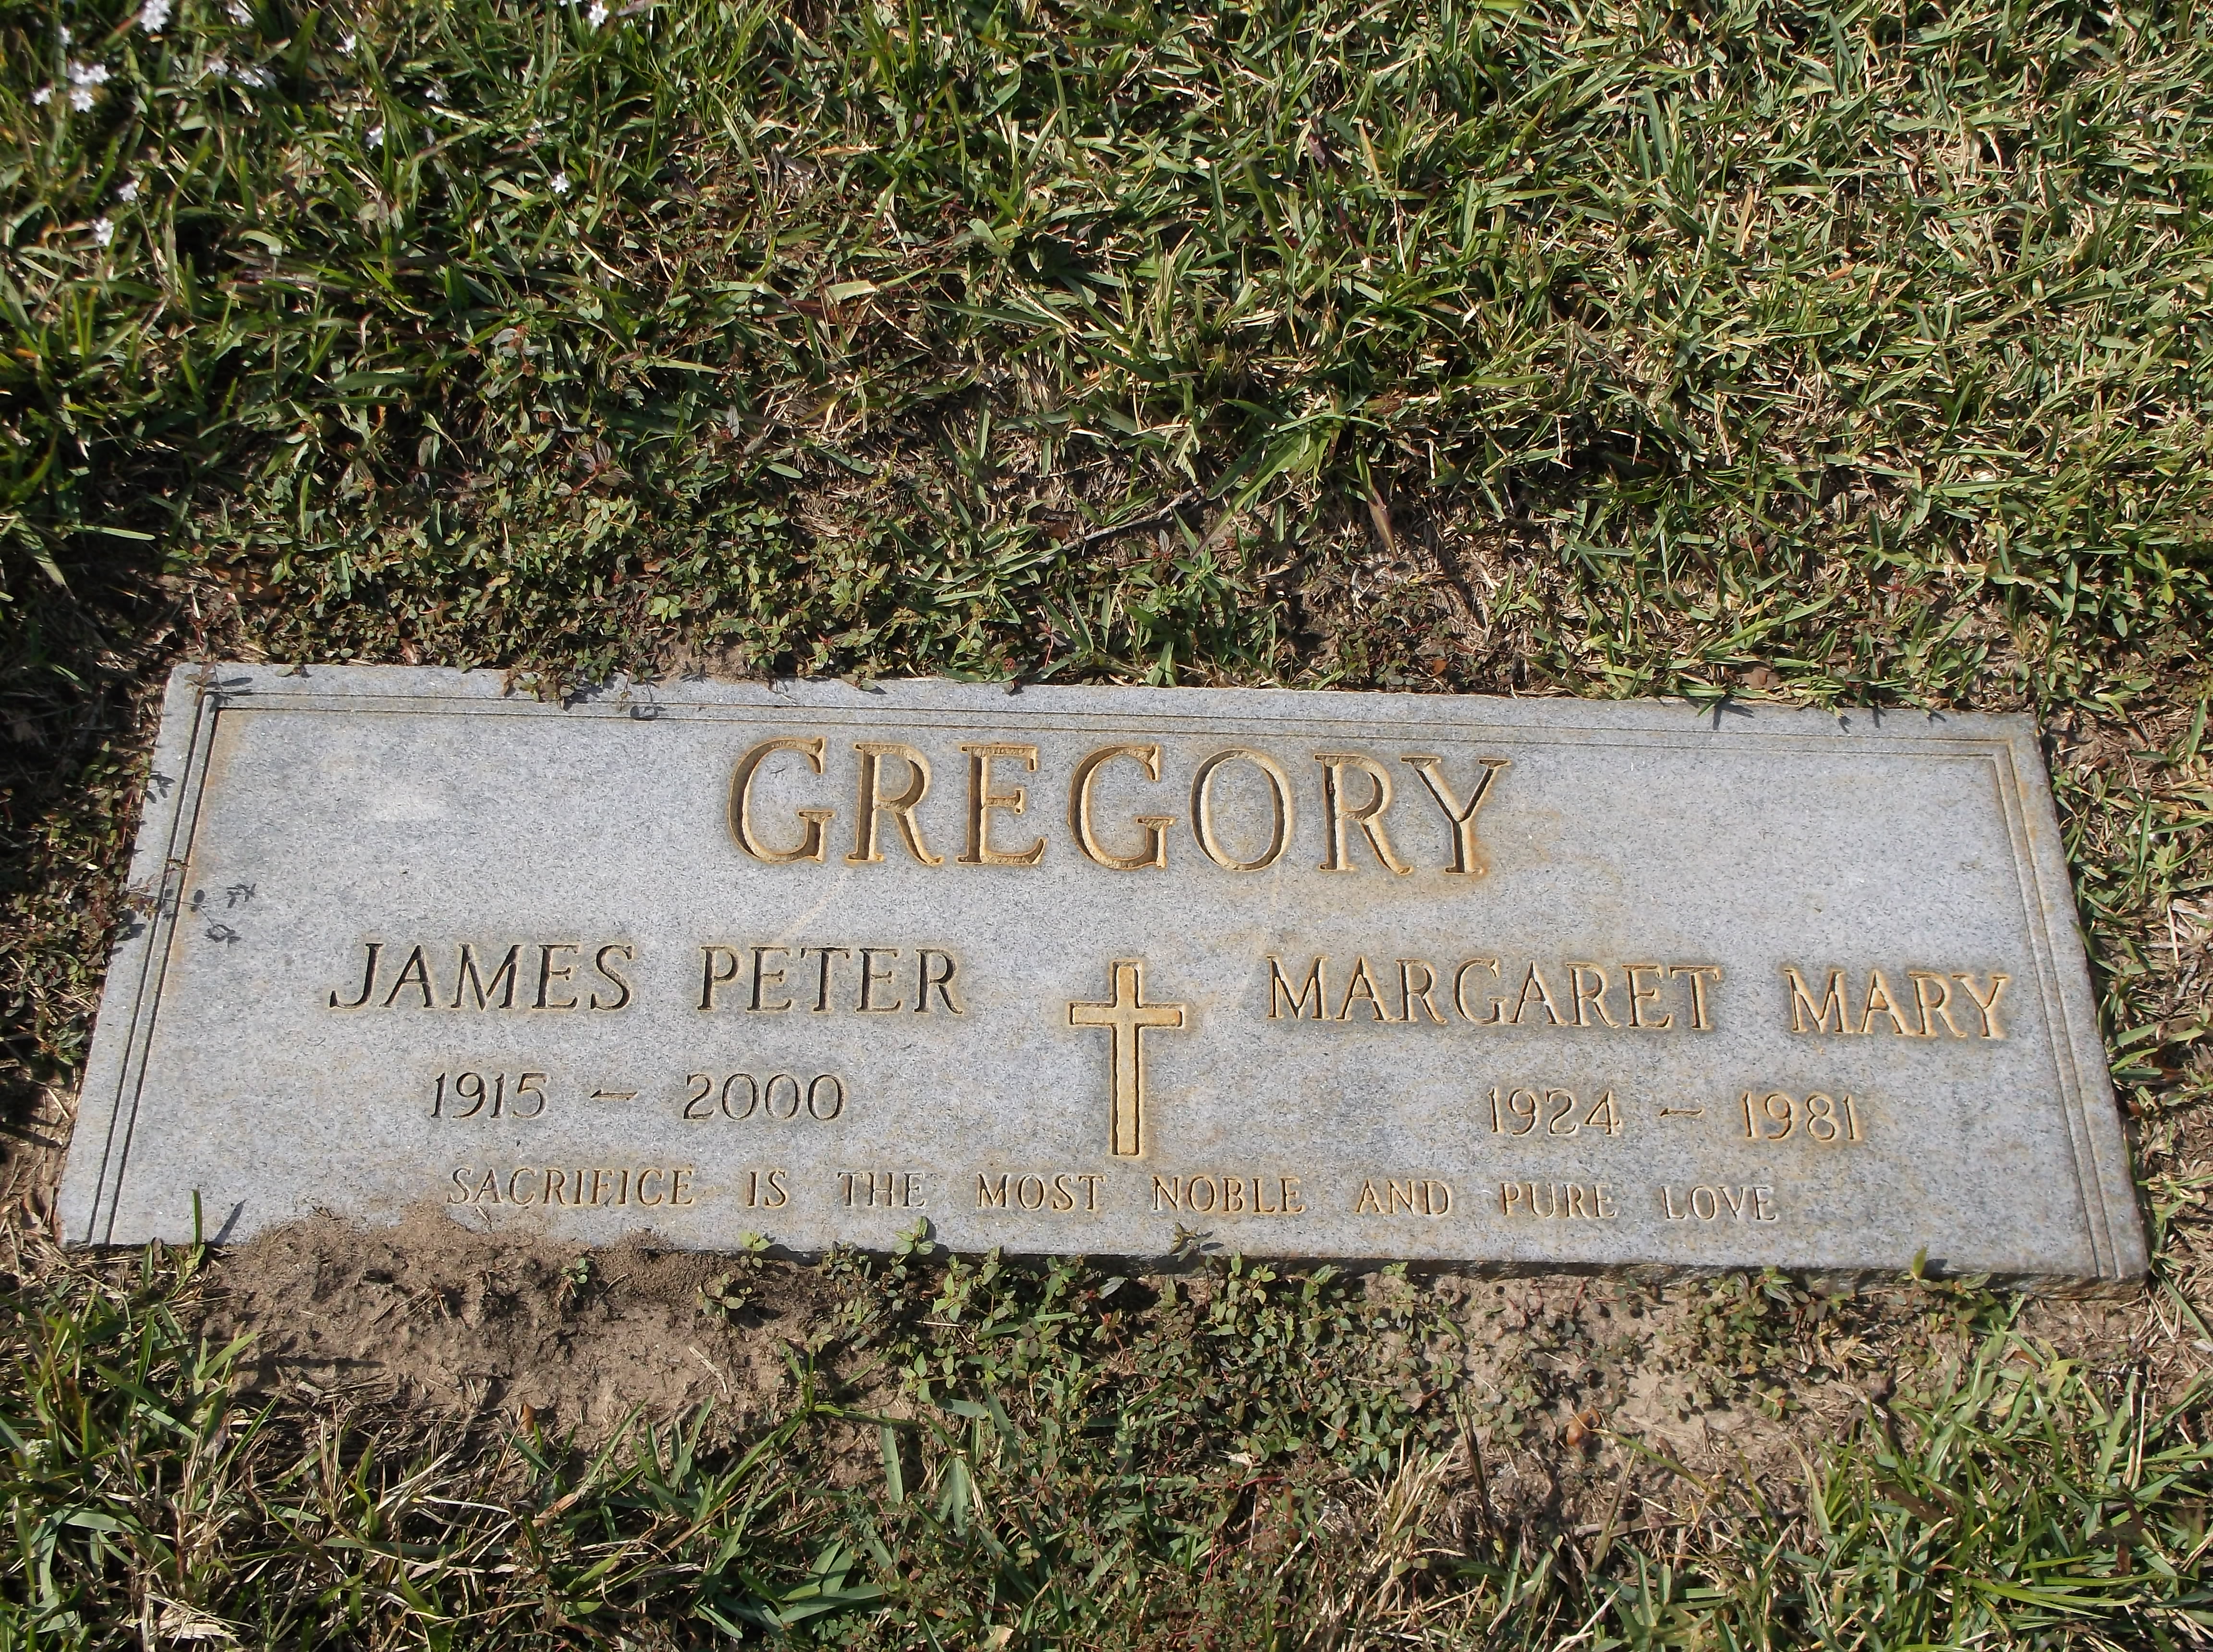 James Peter Gregory